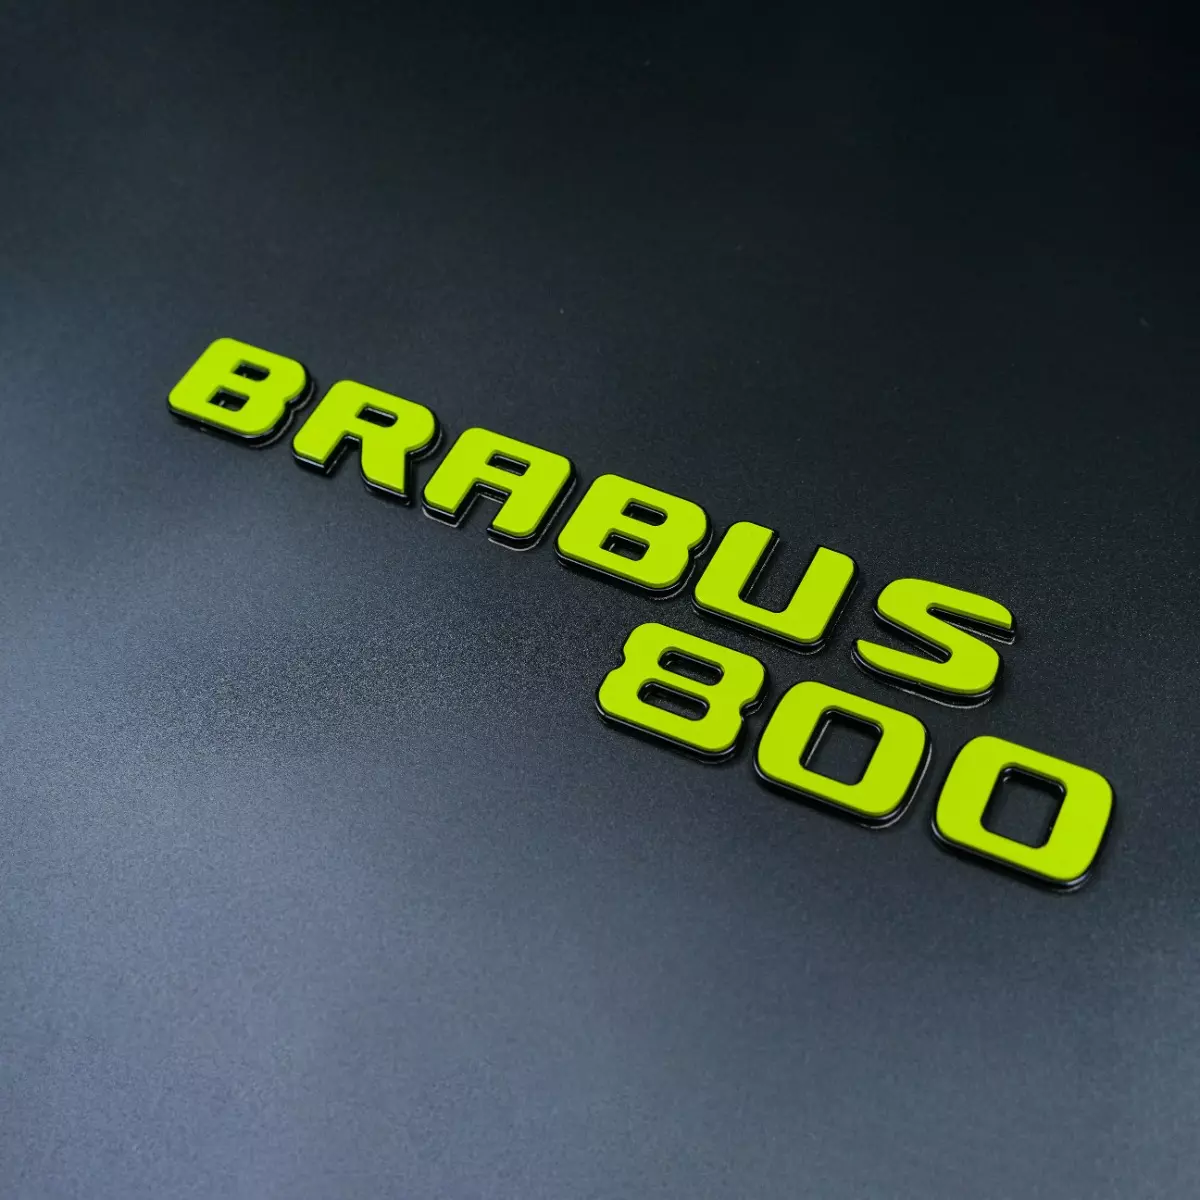 Lime Green with Black Brabus 800 Badges Emblems Set for Mercedes-Benz Vehicles